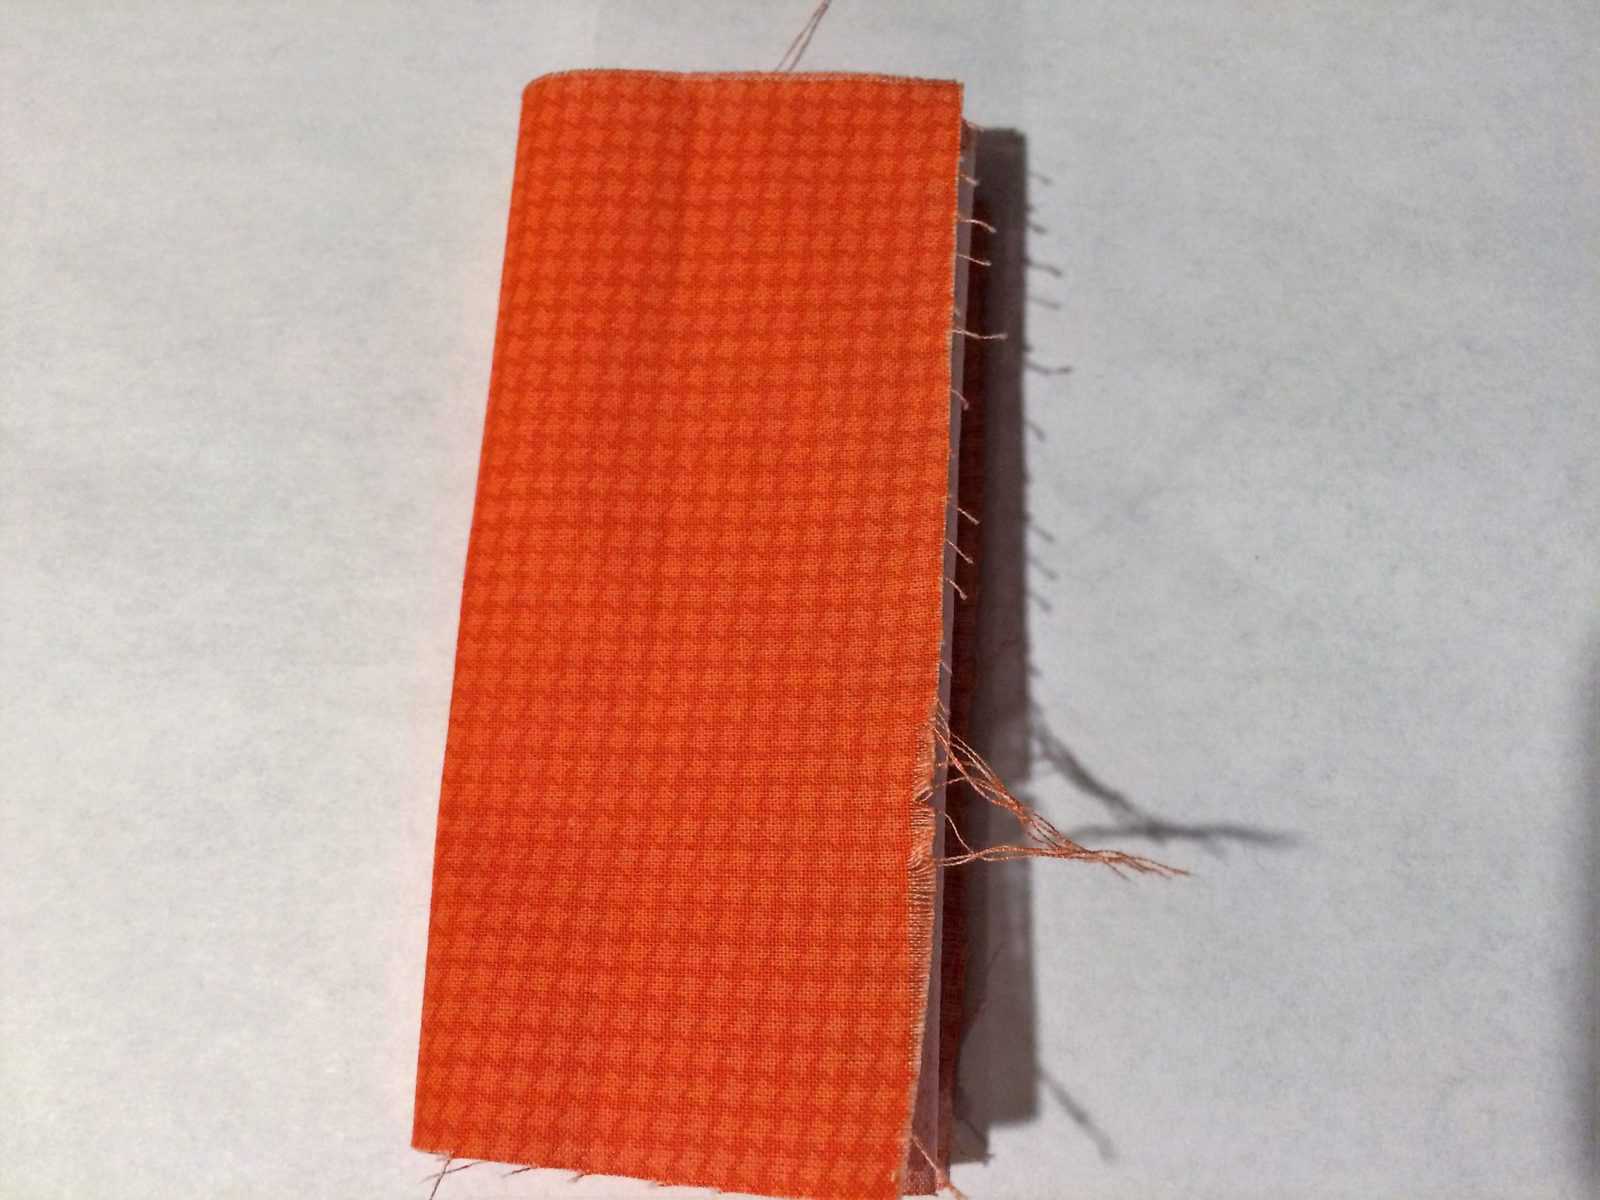 Orange fabric folded into smaller rectangle.